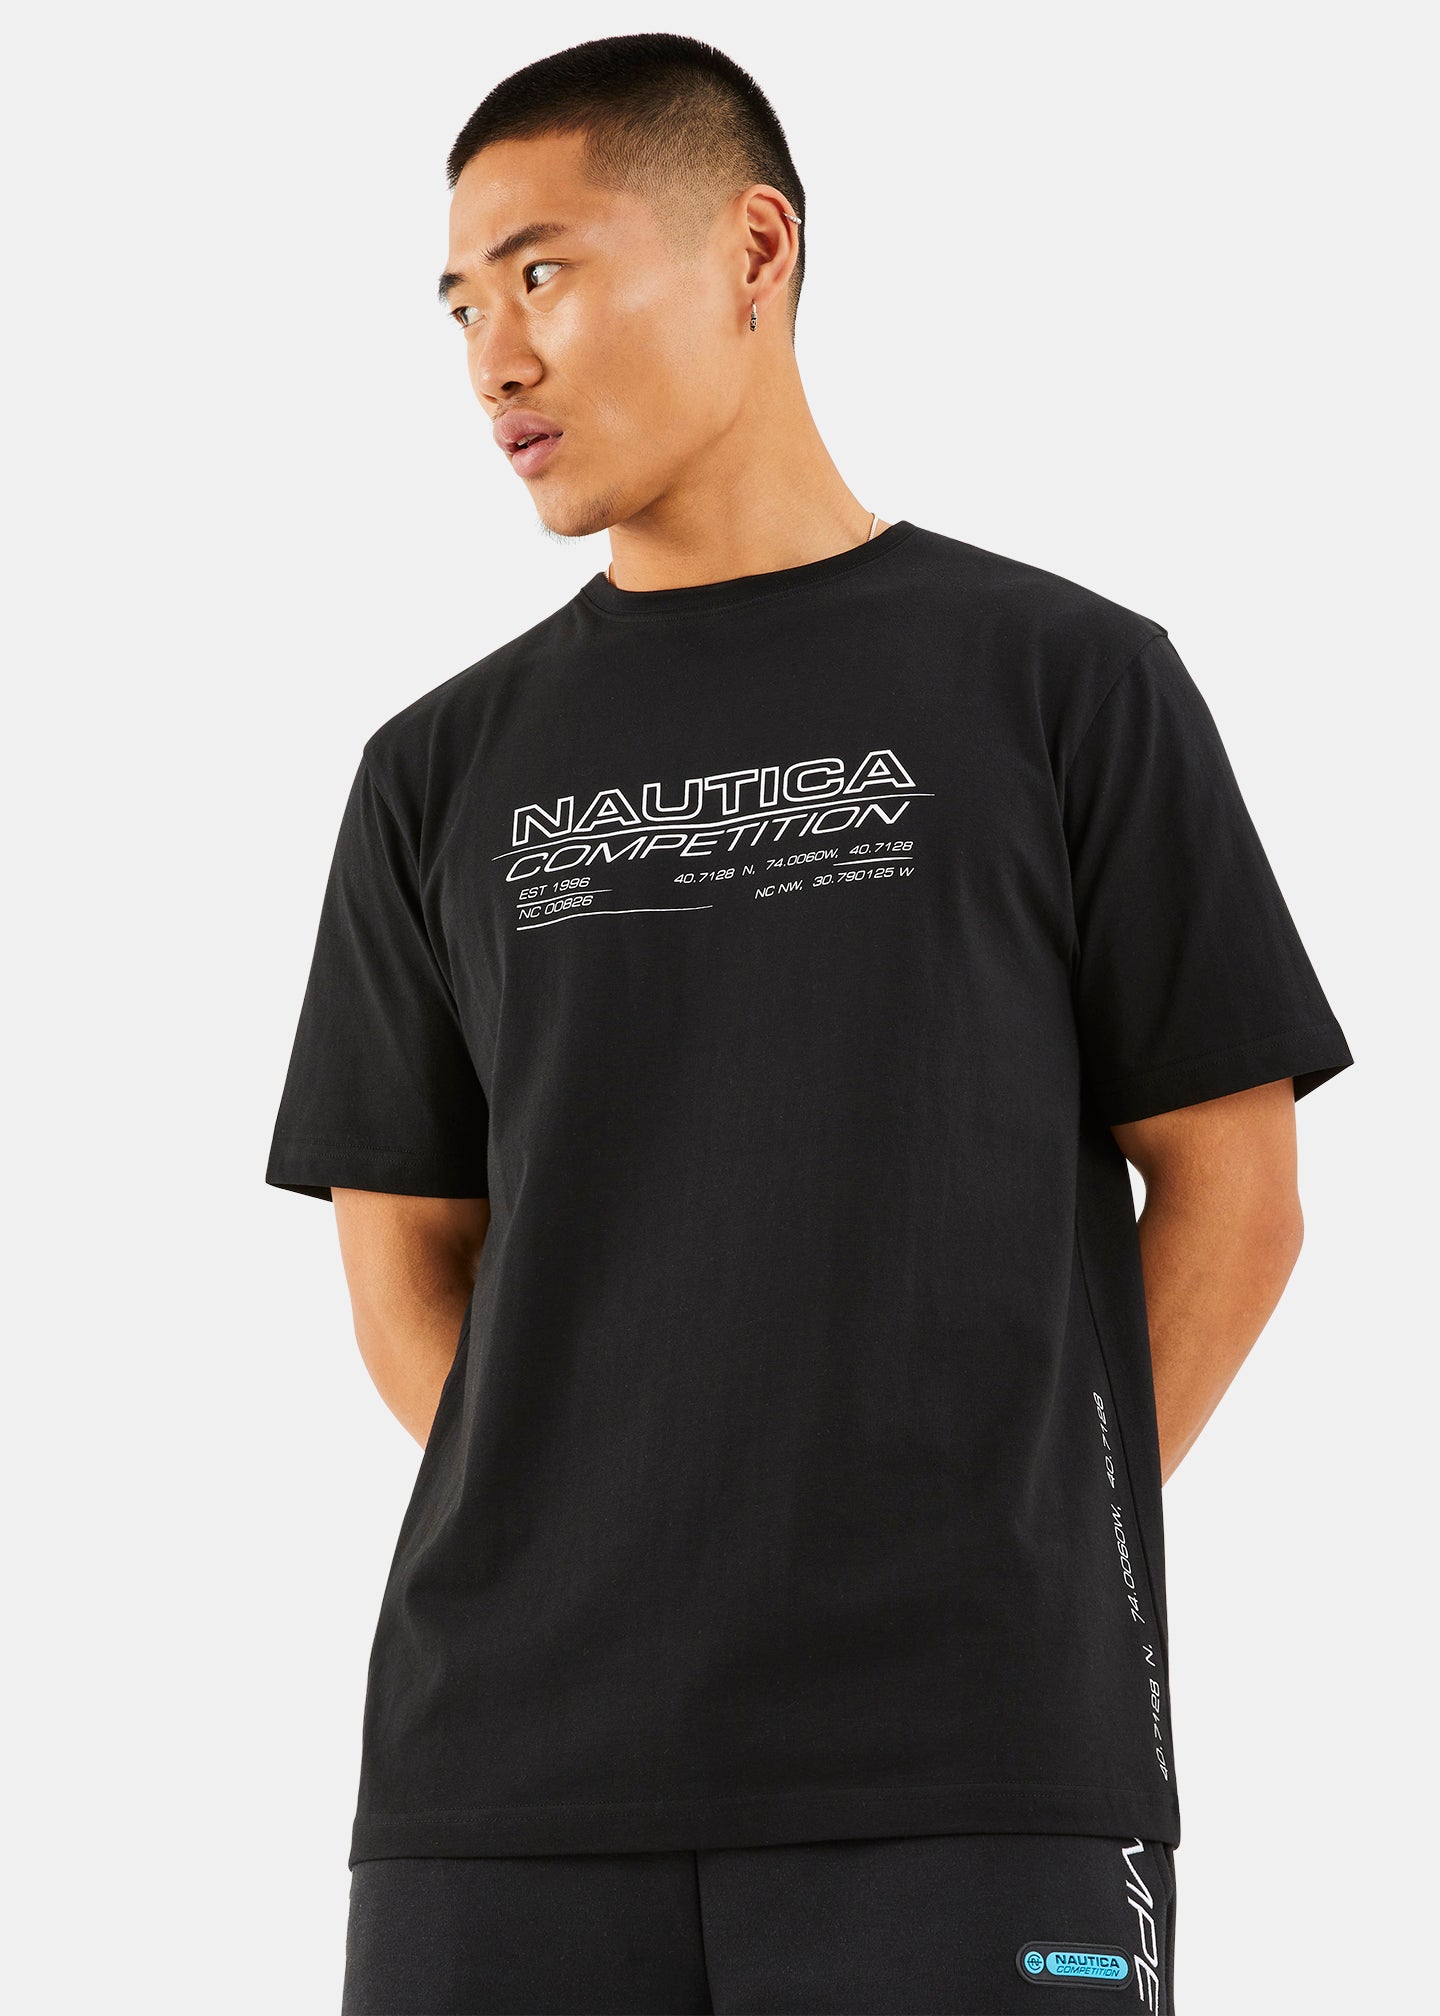 Nautica Competition Jaden T-Shirt - Black - Front